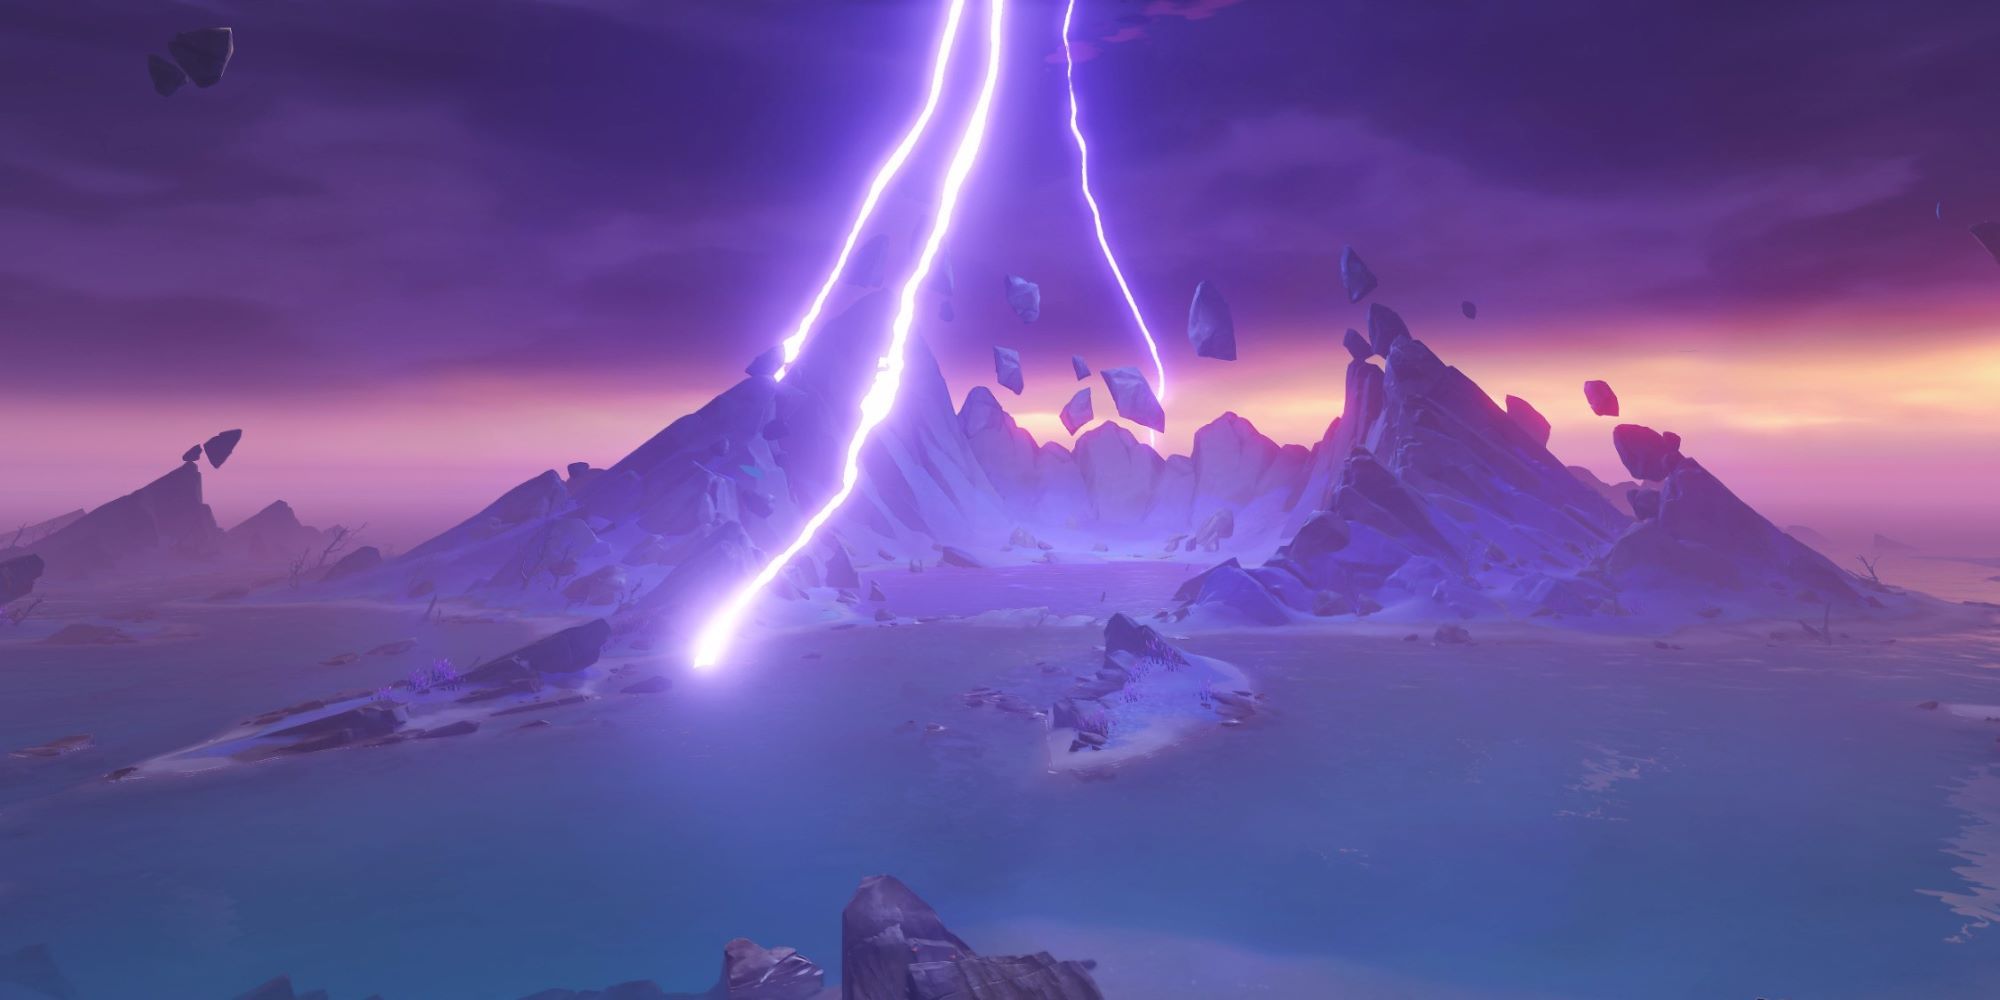 Amakumo Peak with Lightning Striking from the Purple Sky